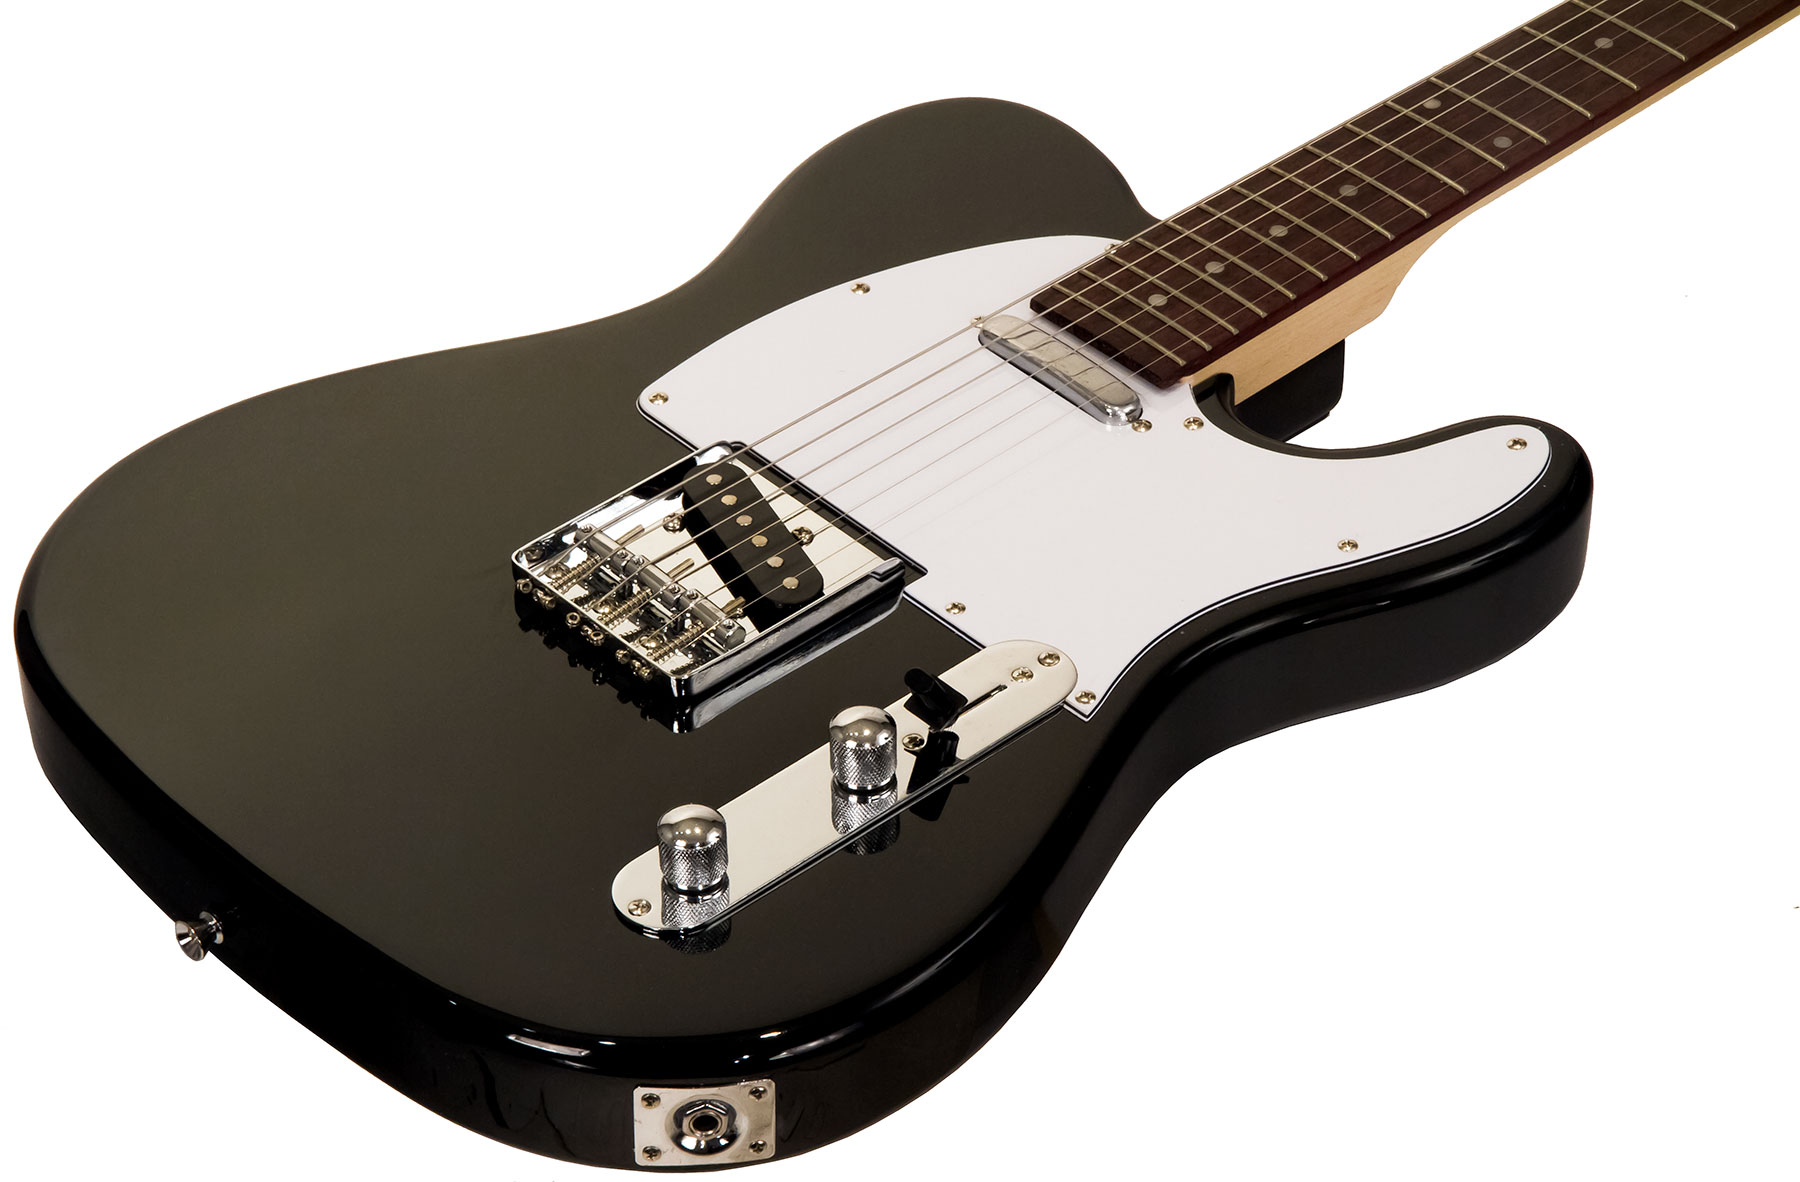 Eastone Tl70 +marshall Mg10g Combo 10 W +housse +courroie +cable +mediators - Black - Pack Guitare Électrique - Variation 1